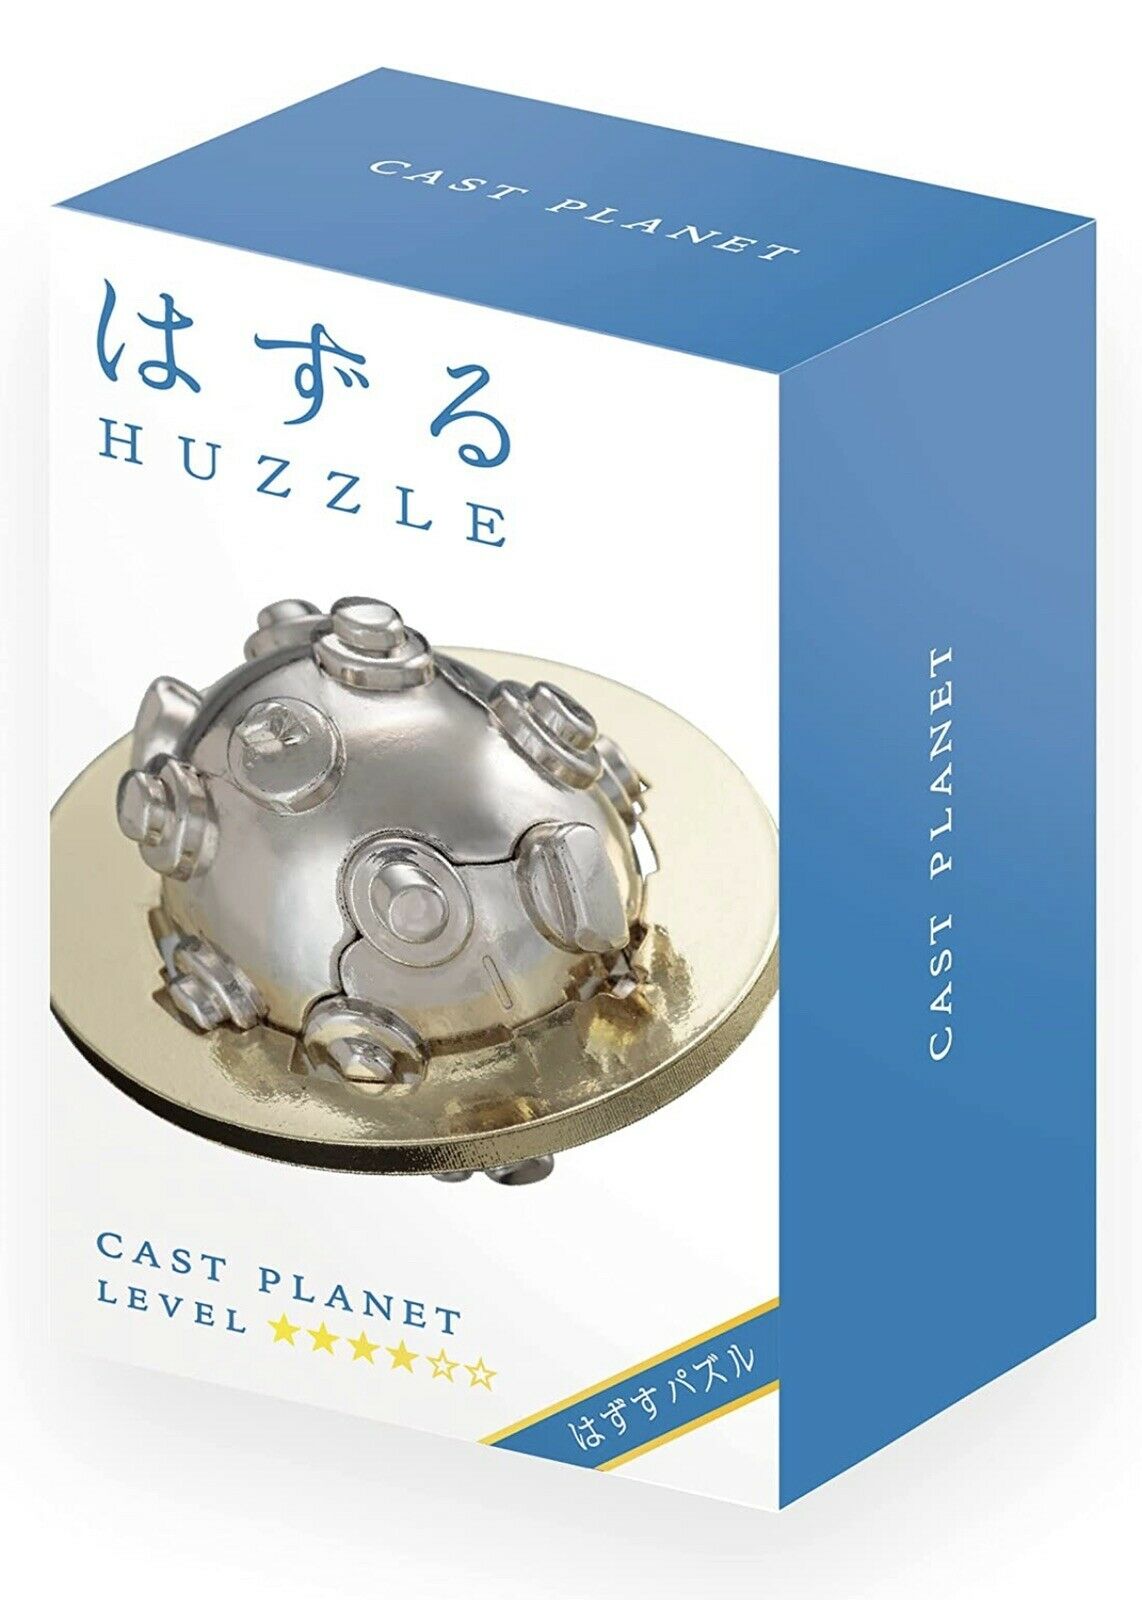 4* Планета (Huzzle Planet) | Головоломка из металла